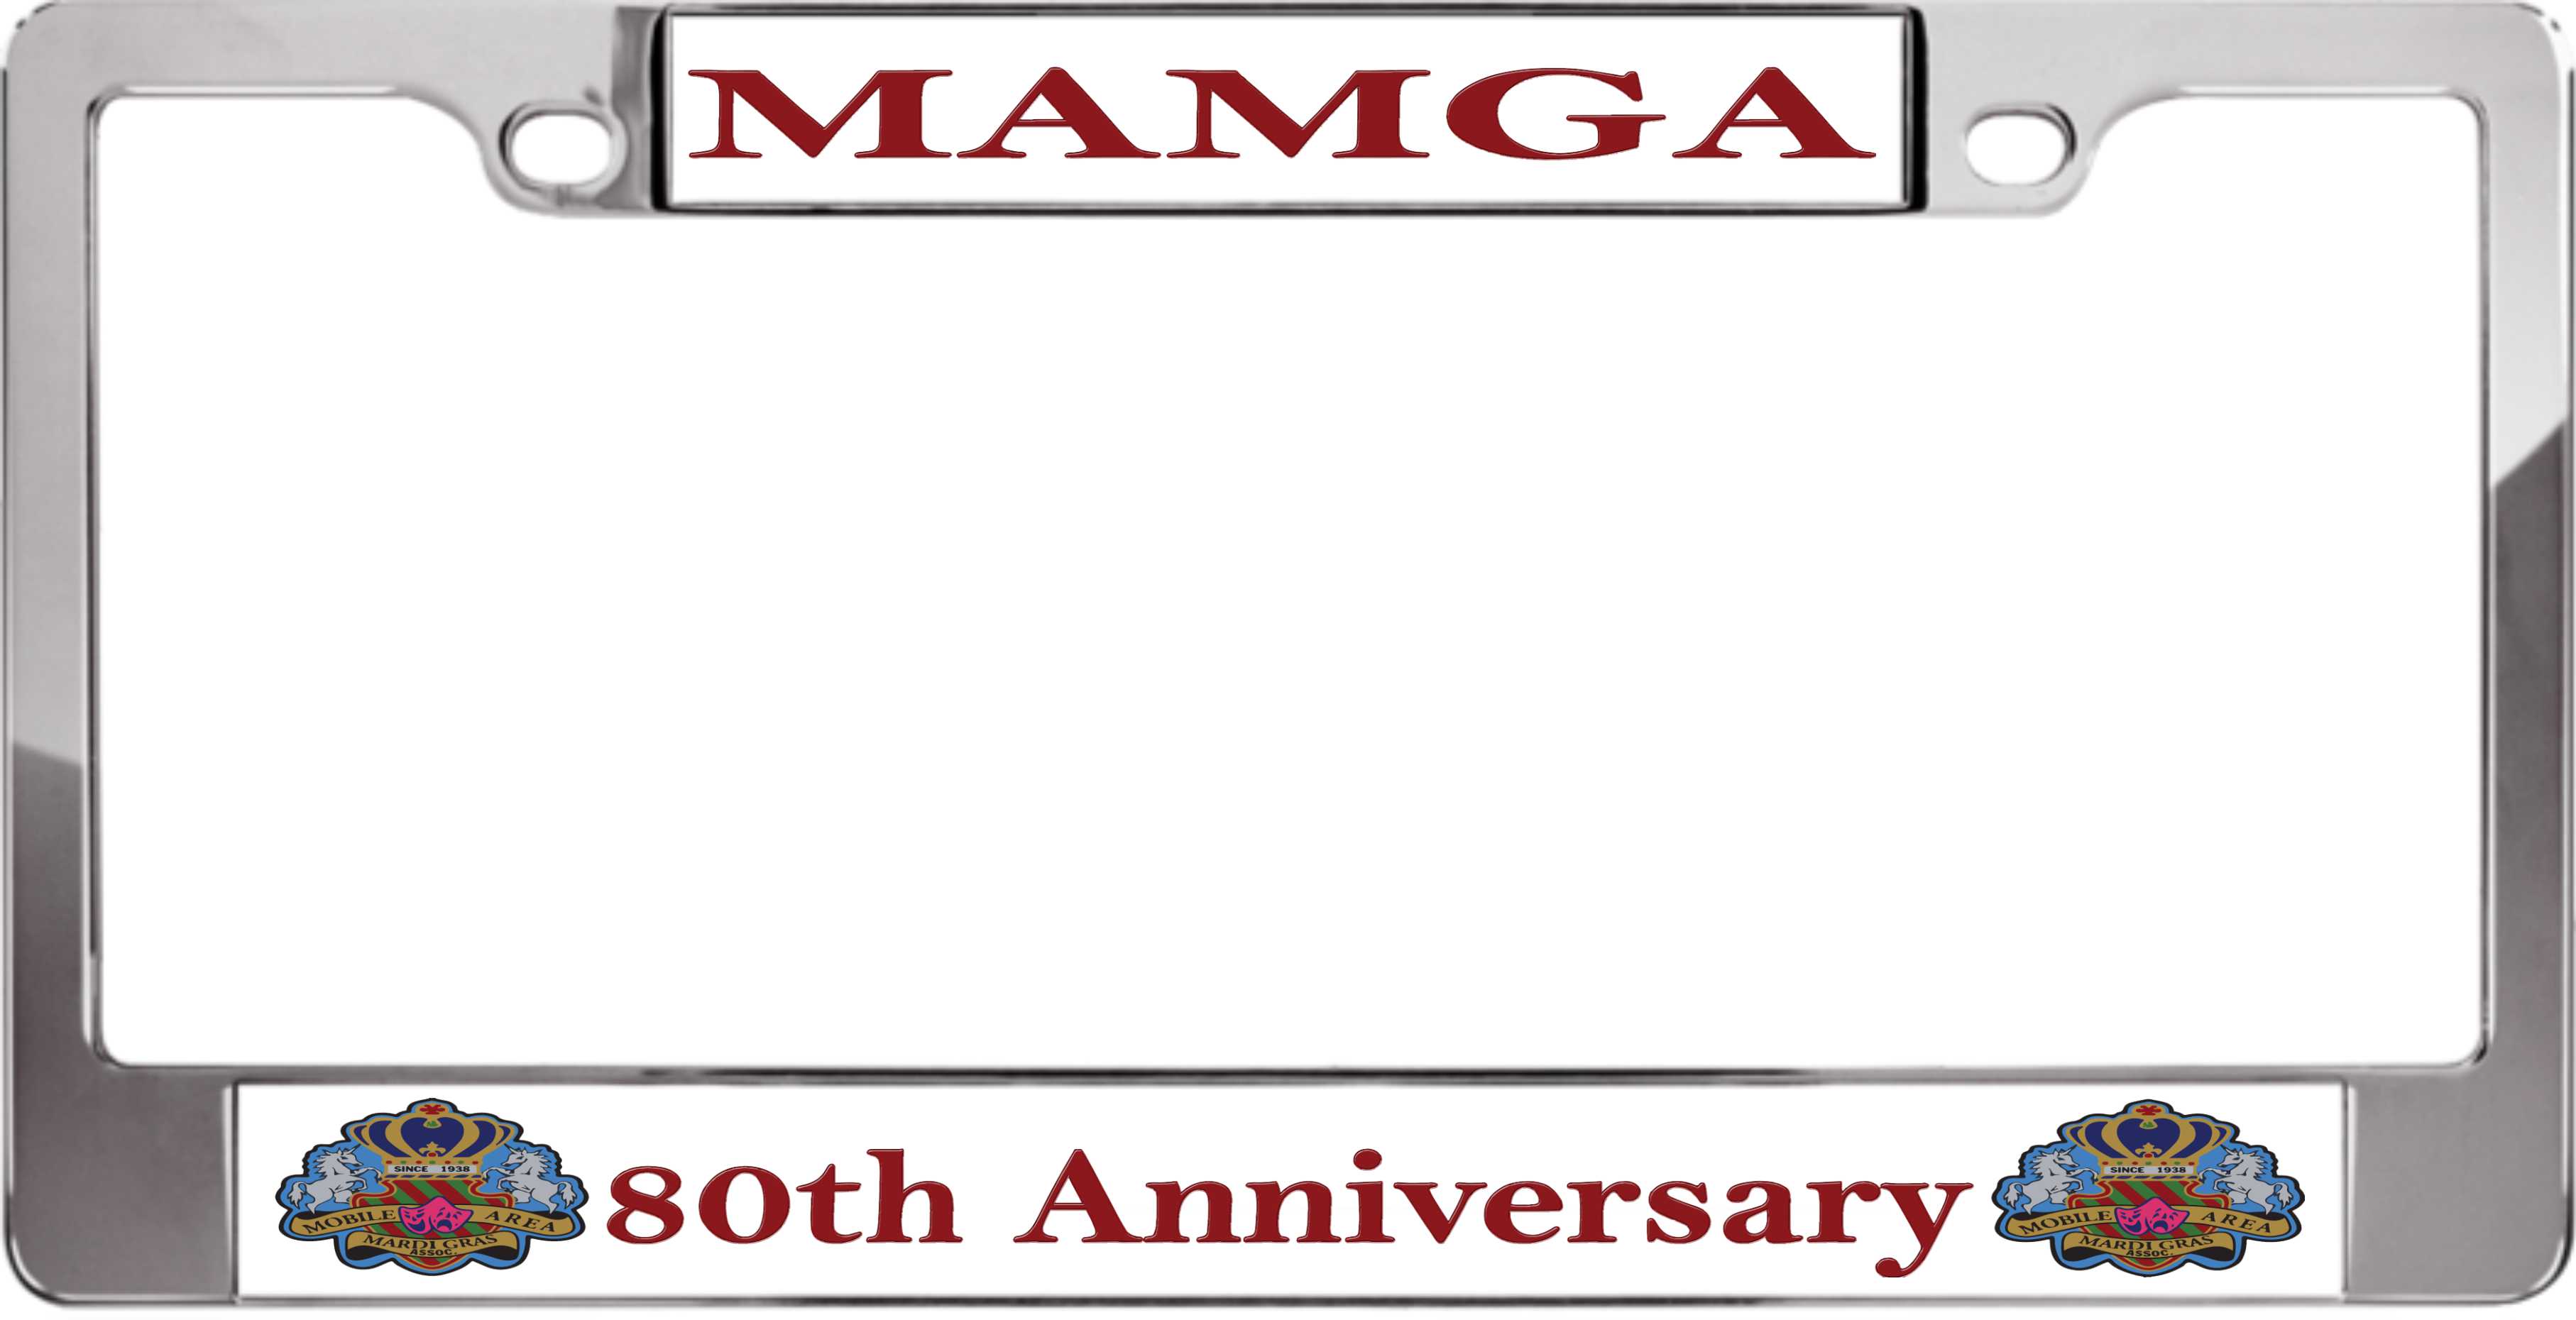 MAMGA - custom license plate frame